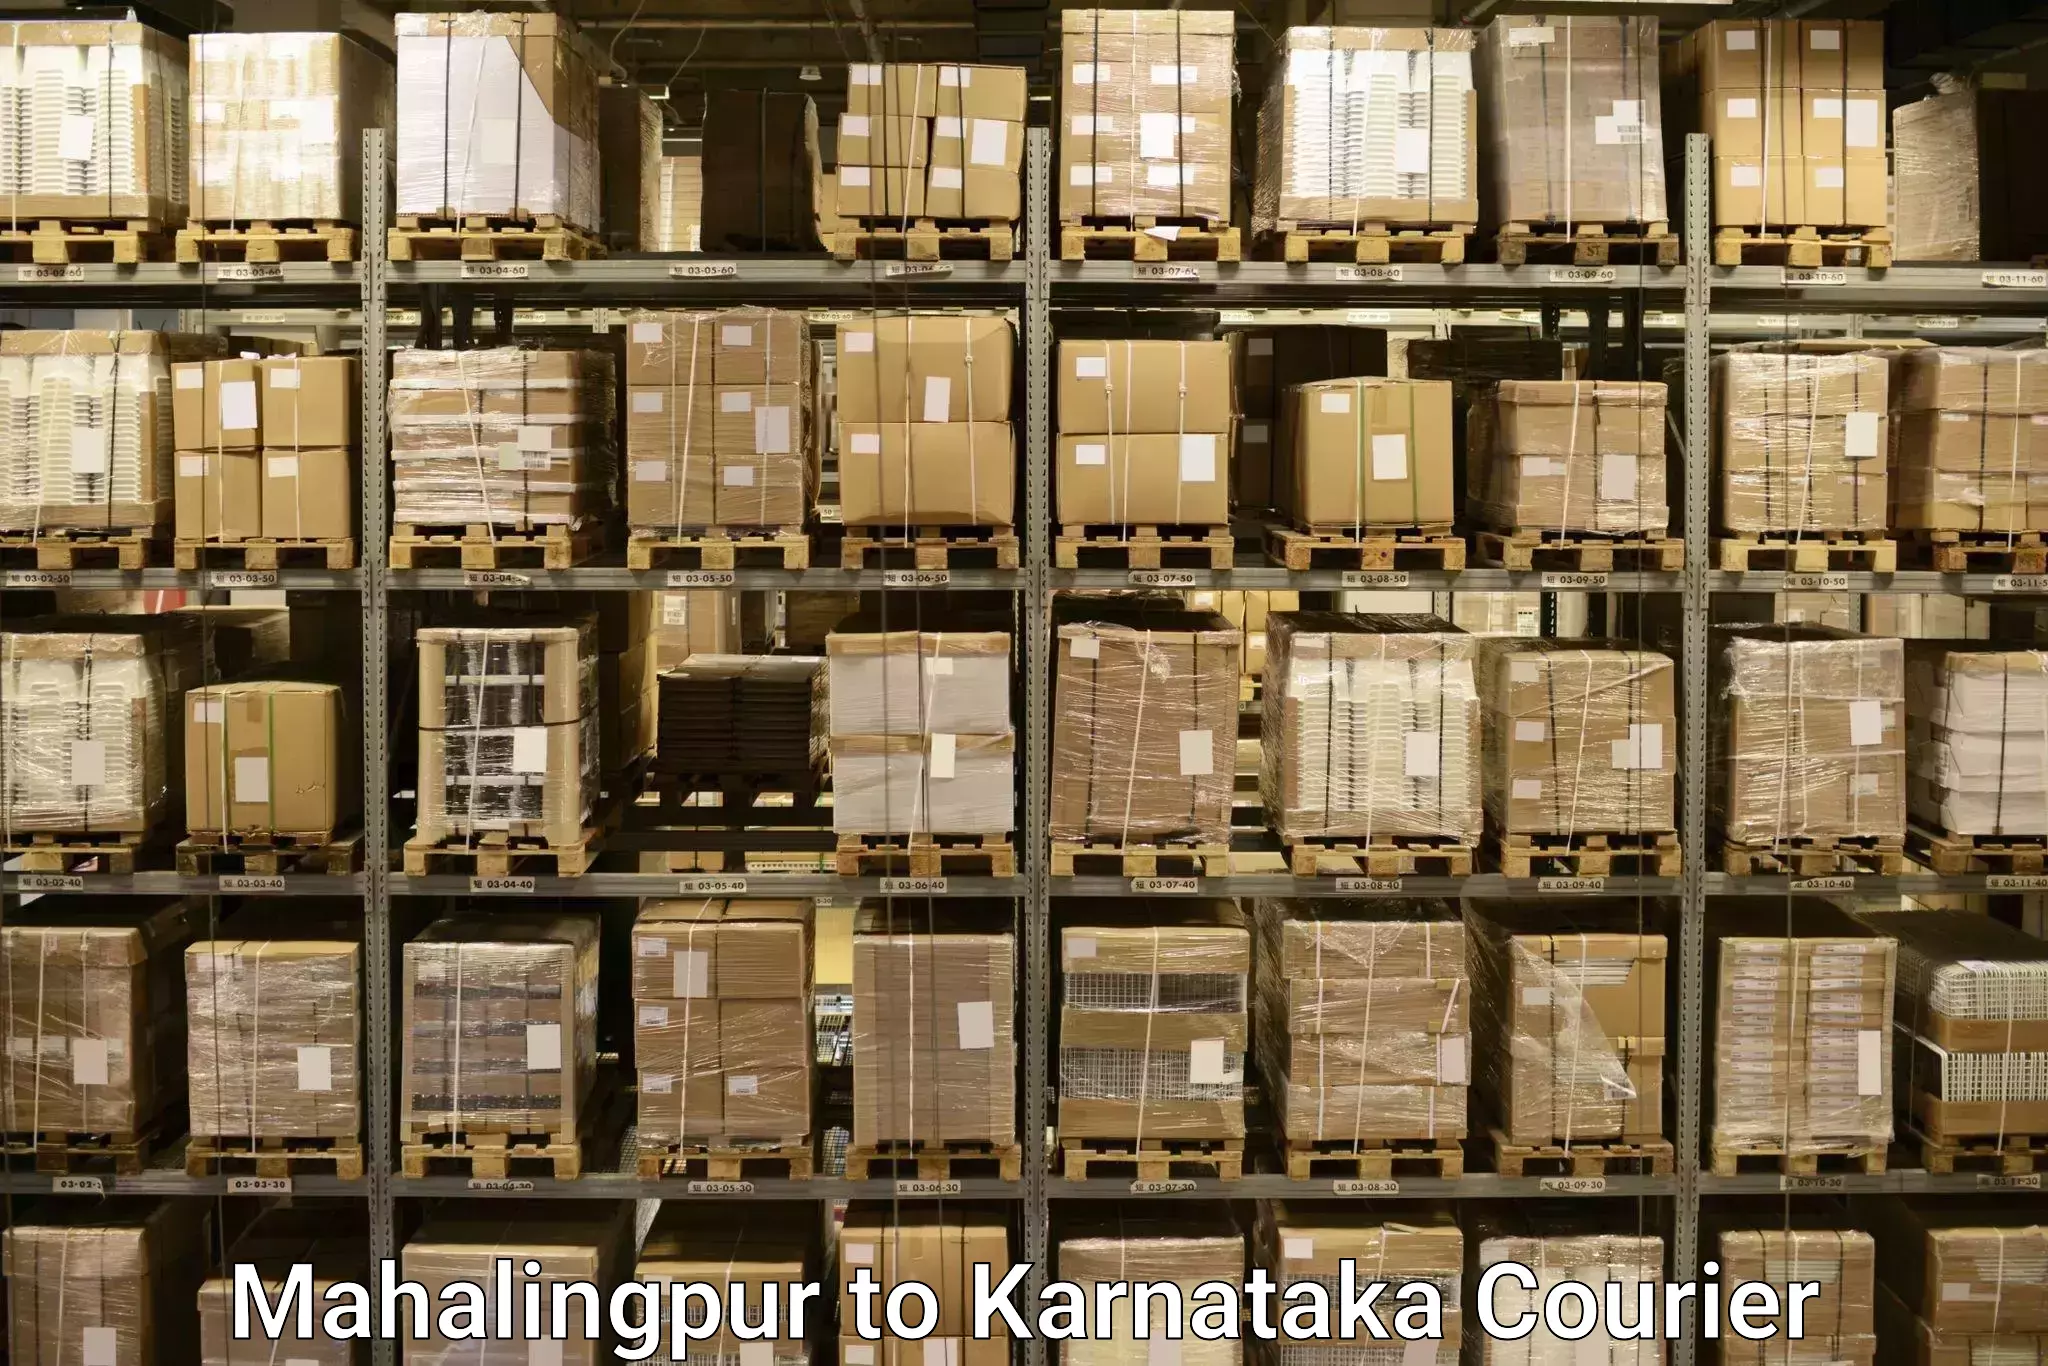 Baggage delivery support Mahalingpur to Kanjarakatte